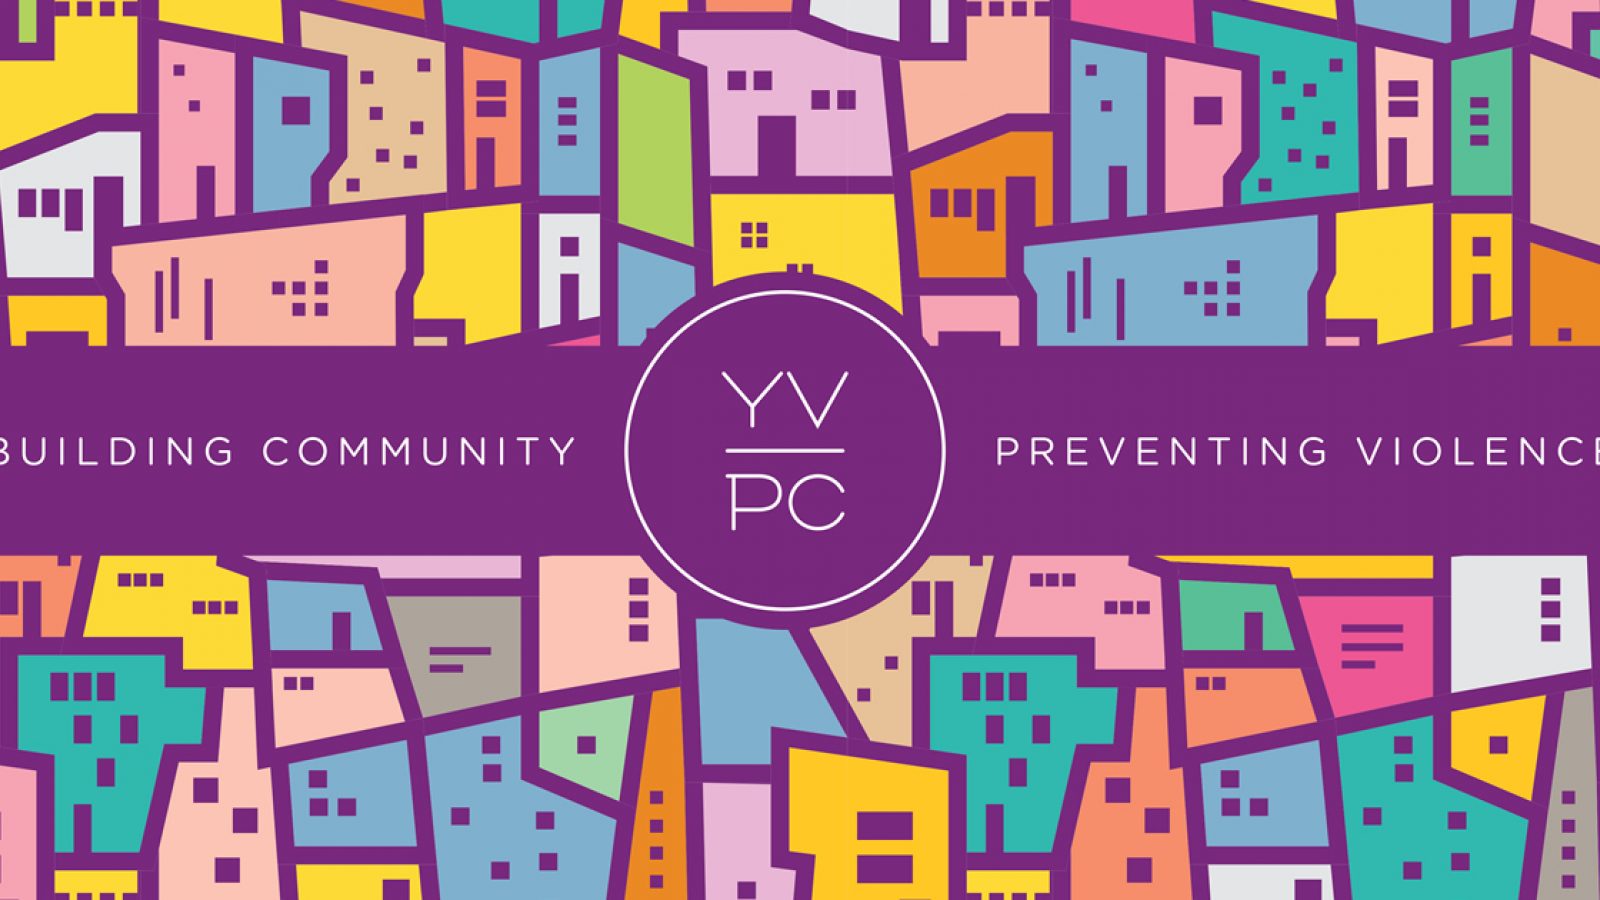 Yvpc buildingcommunity FB